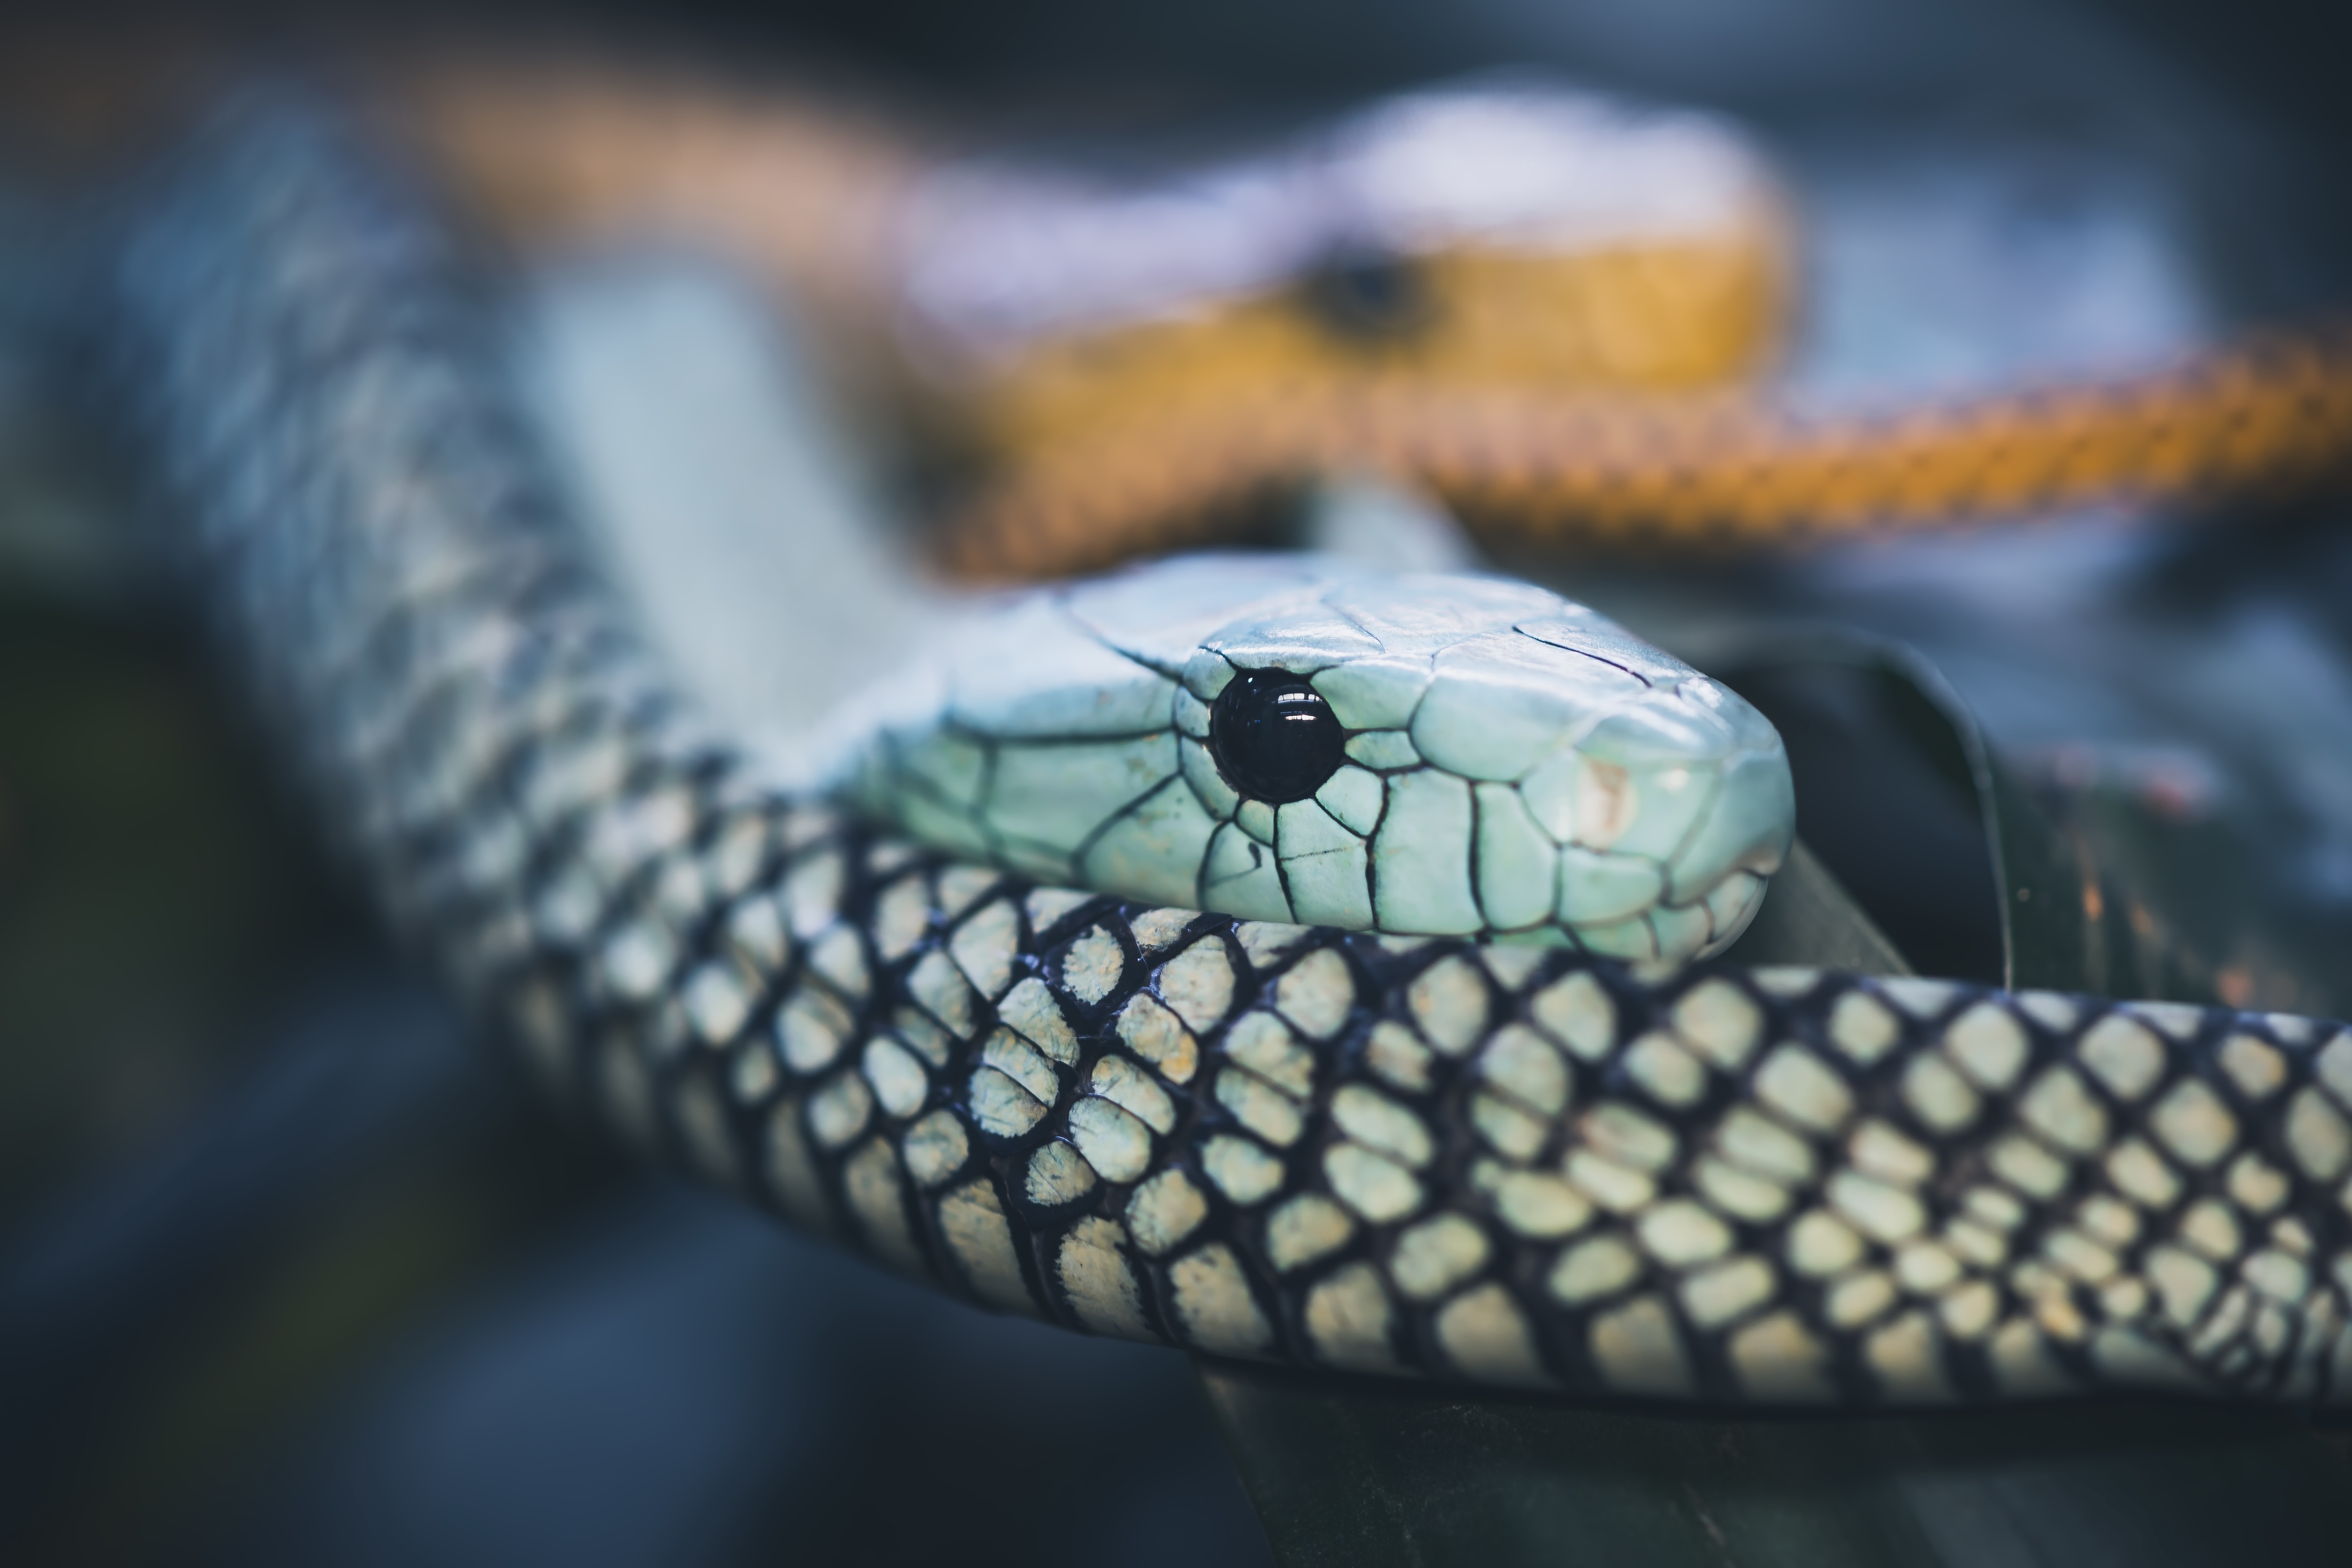 Snake 4k Ultra HD Wallpaper